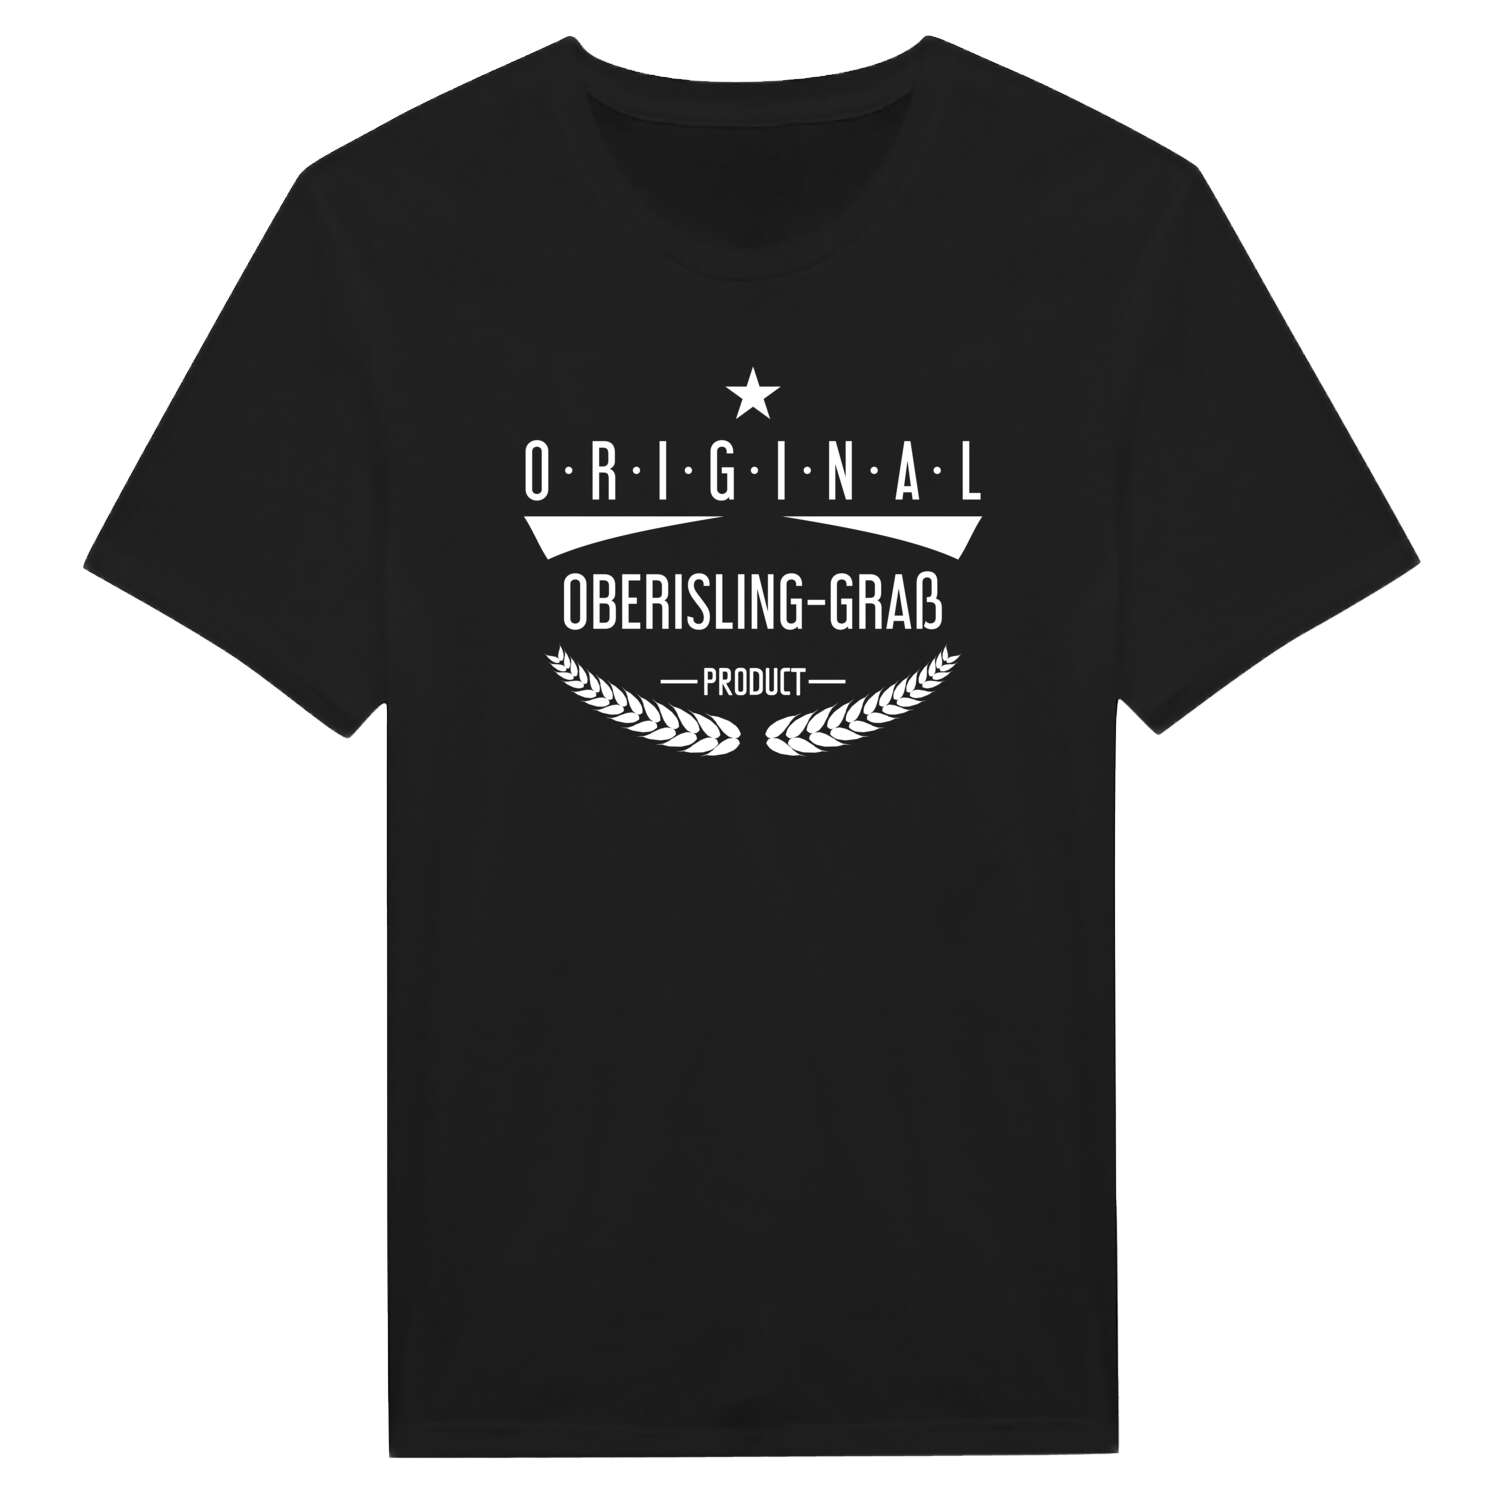 Oberisling-Graß T-Shirt »Original Product«